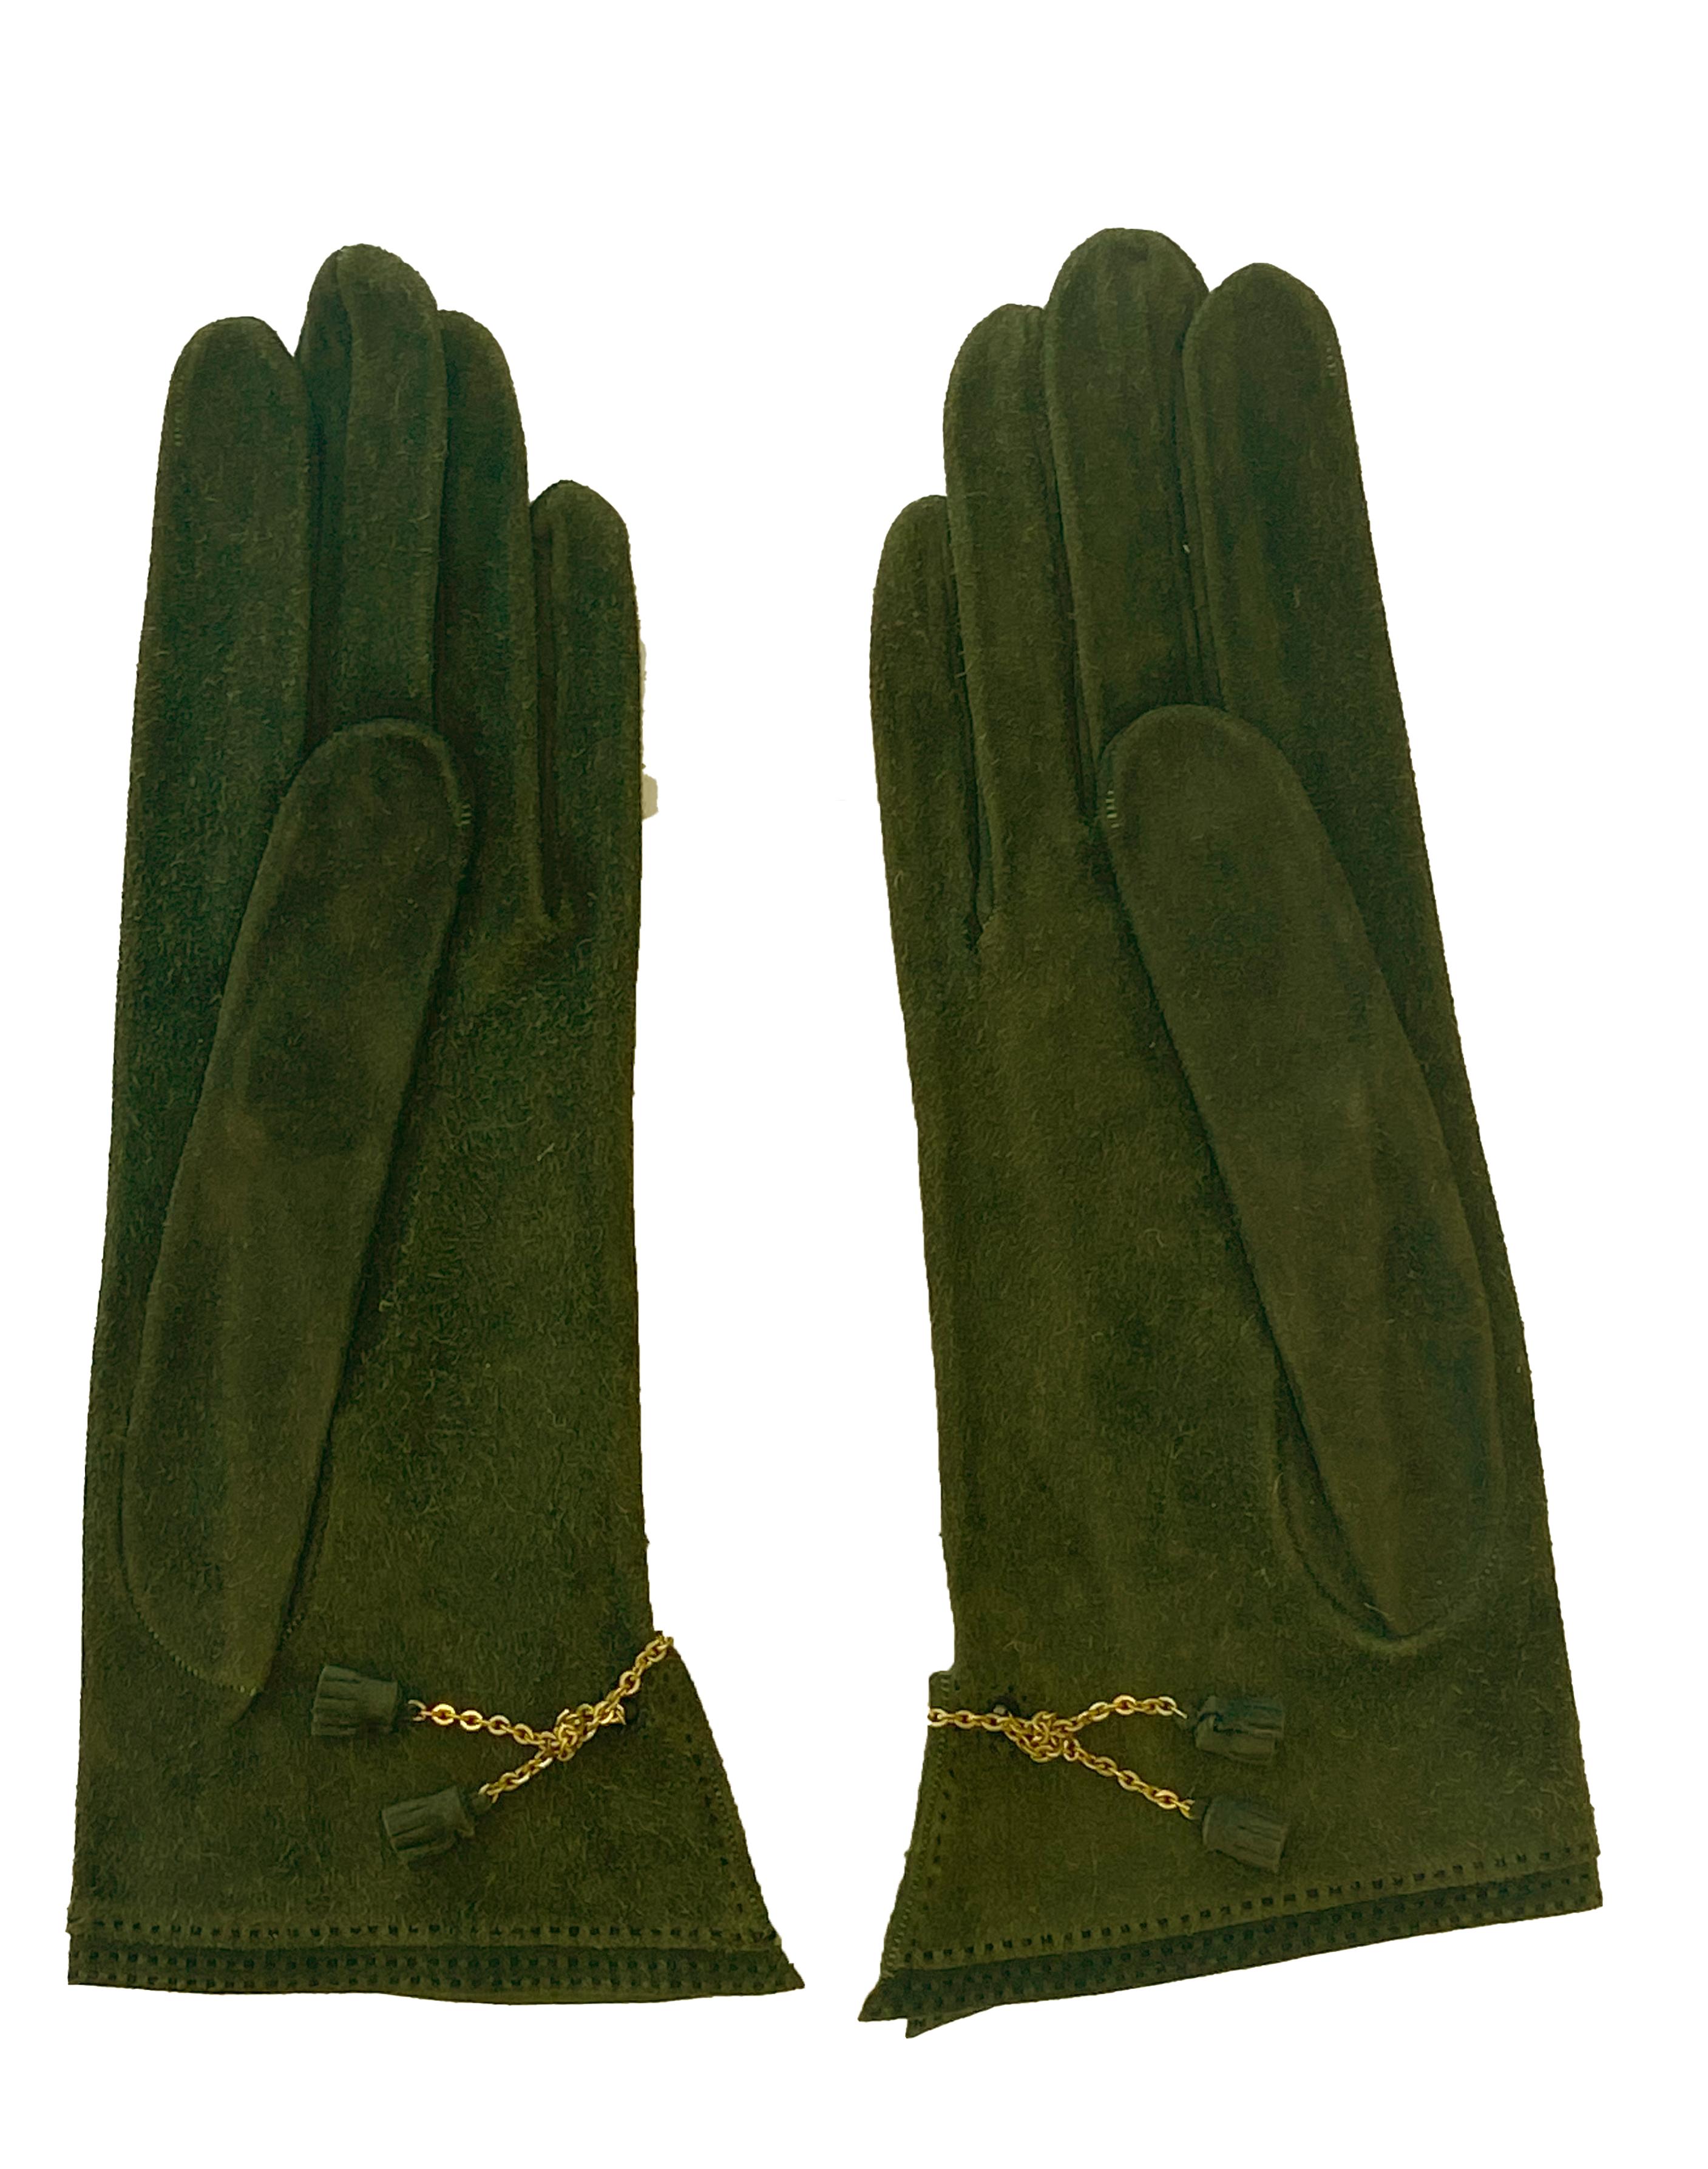 Women's Hermes Forest Green Suede Gloves with Gold Chains & Tassels 7 1/2 Unworn